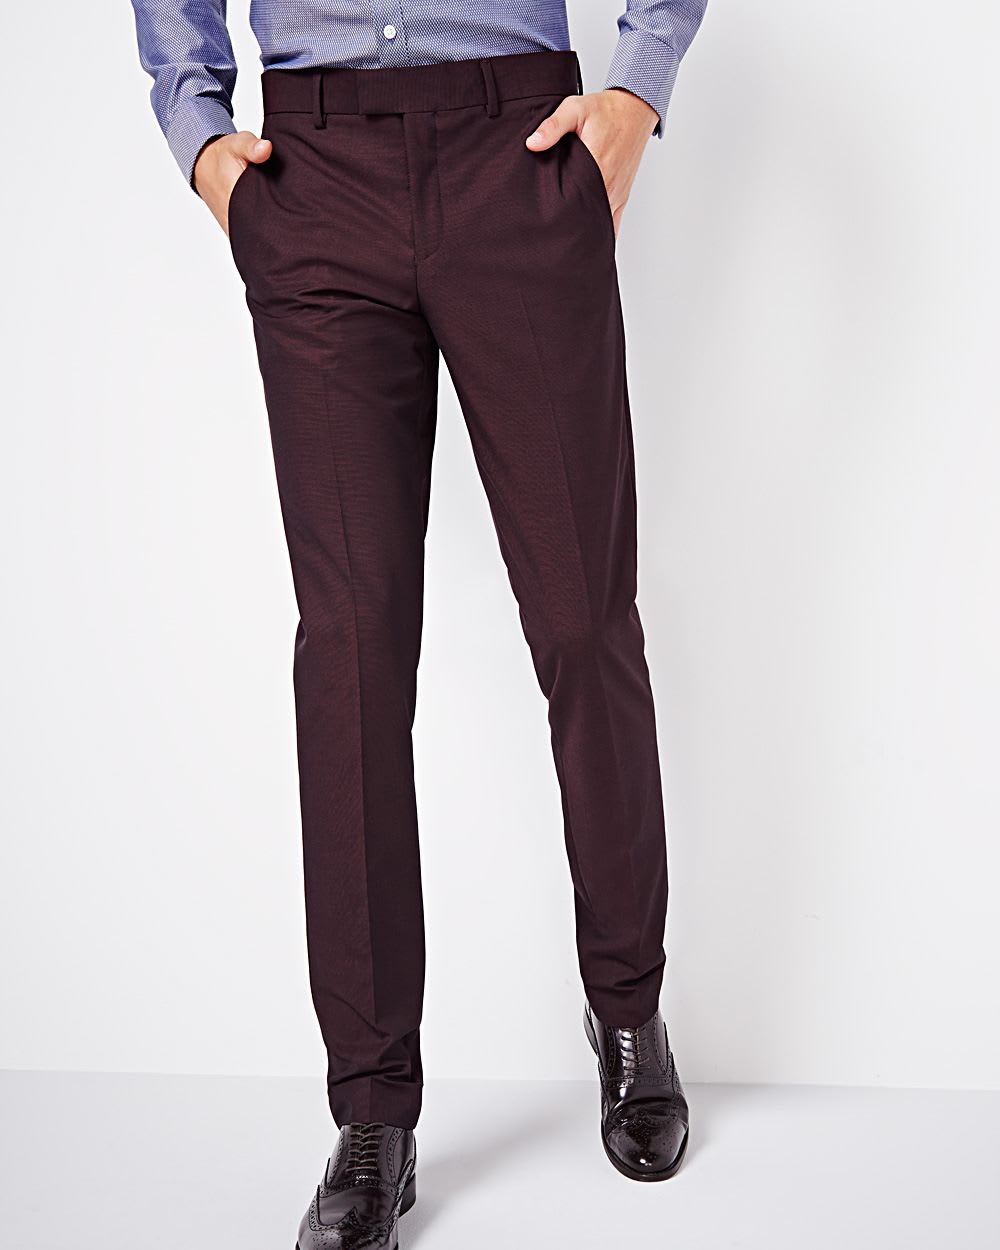 Slim fit burgundy pant - Regular | RW&CO.